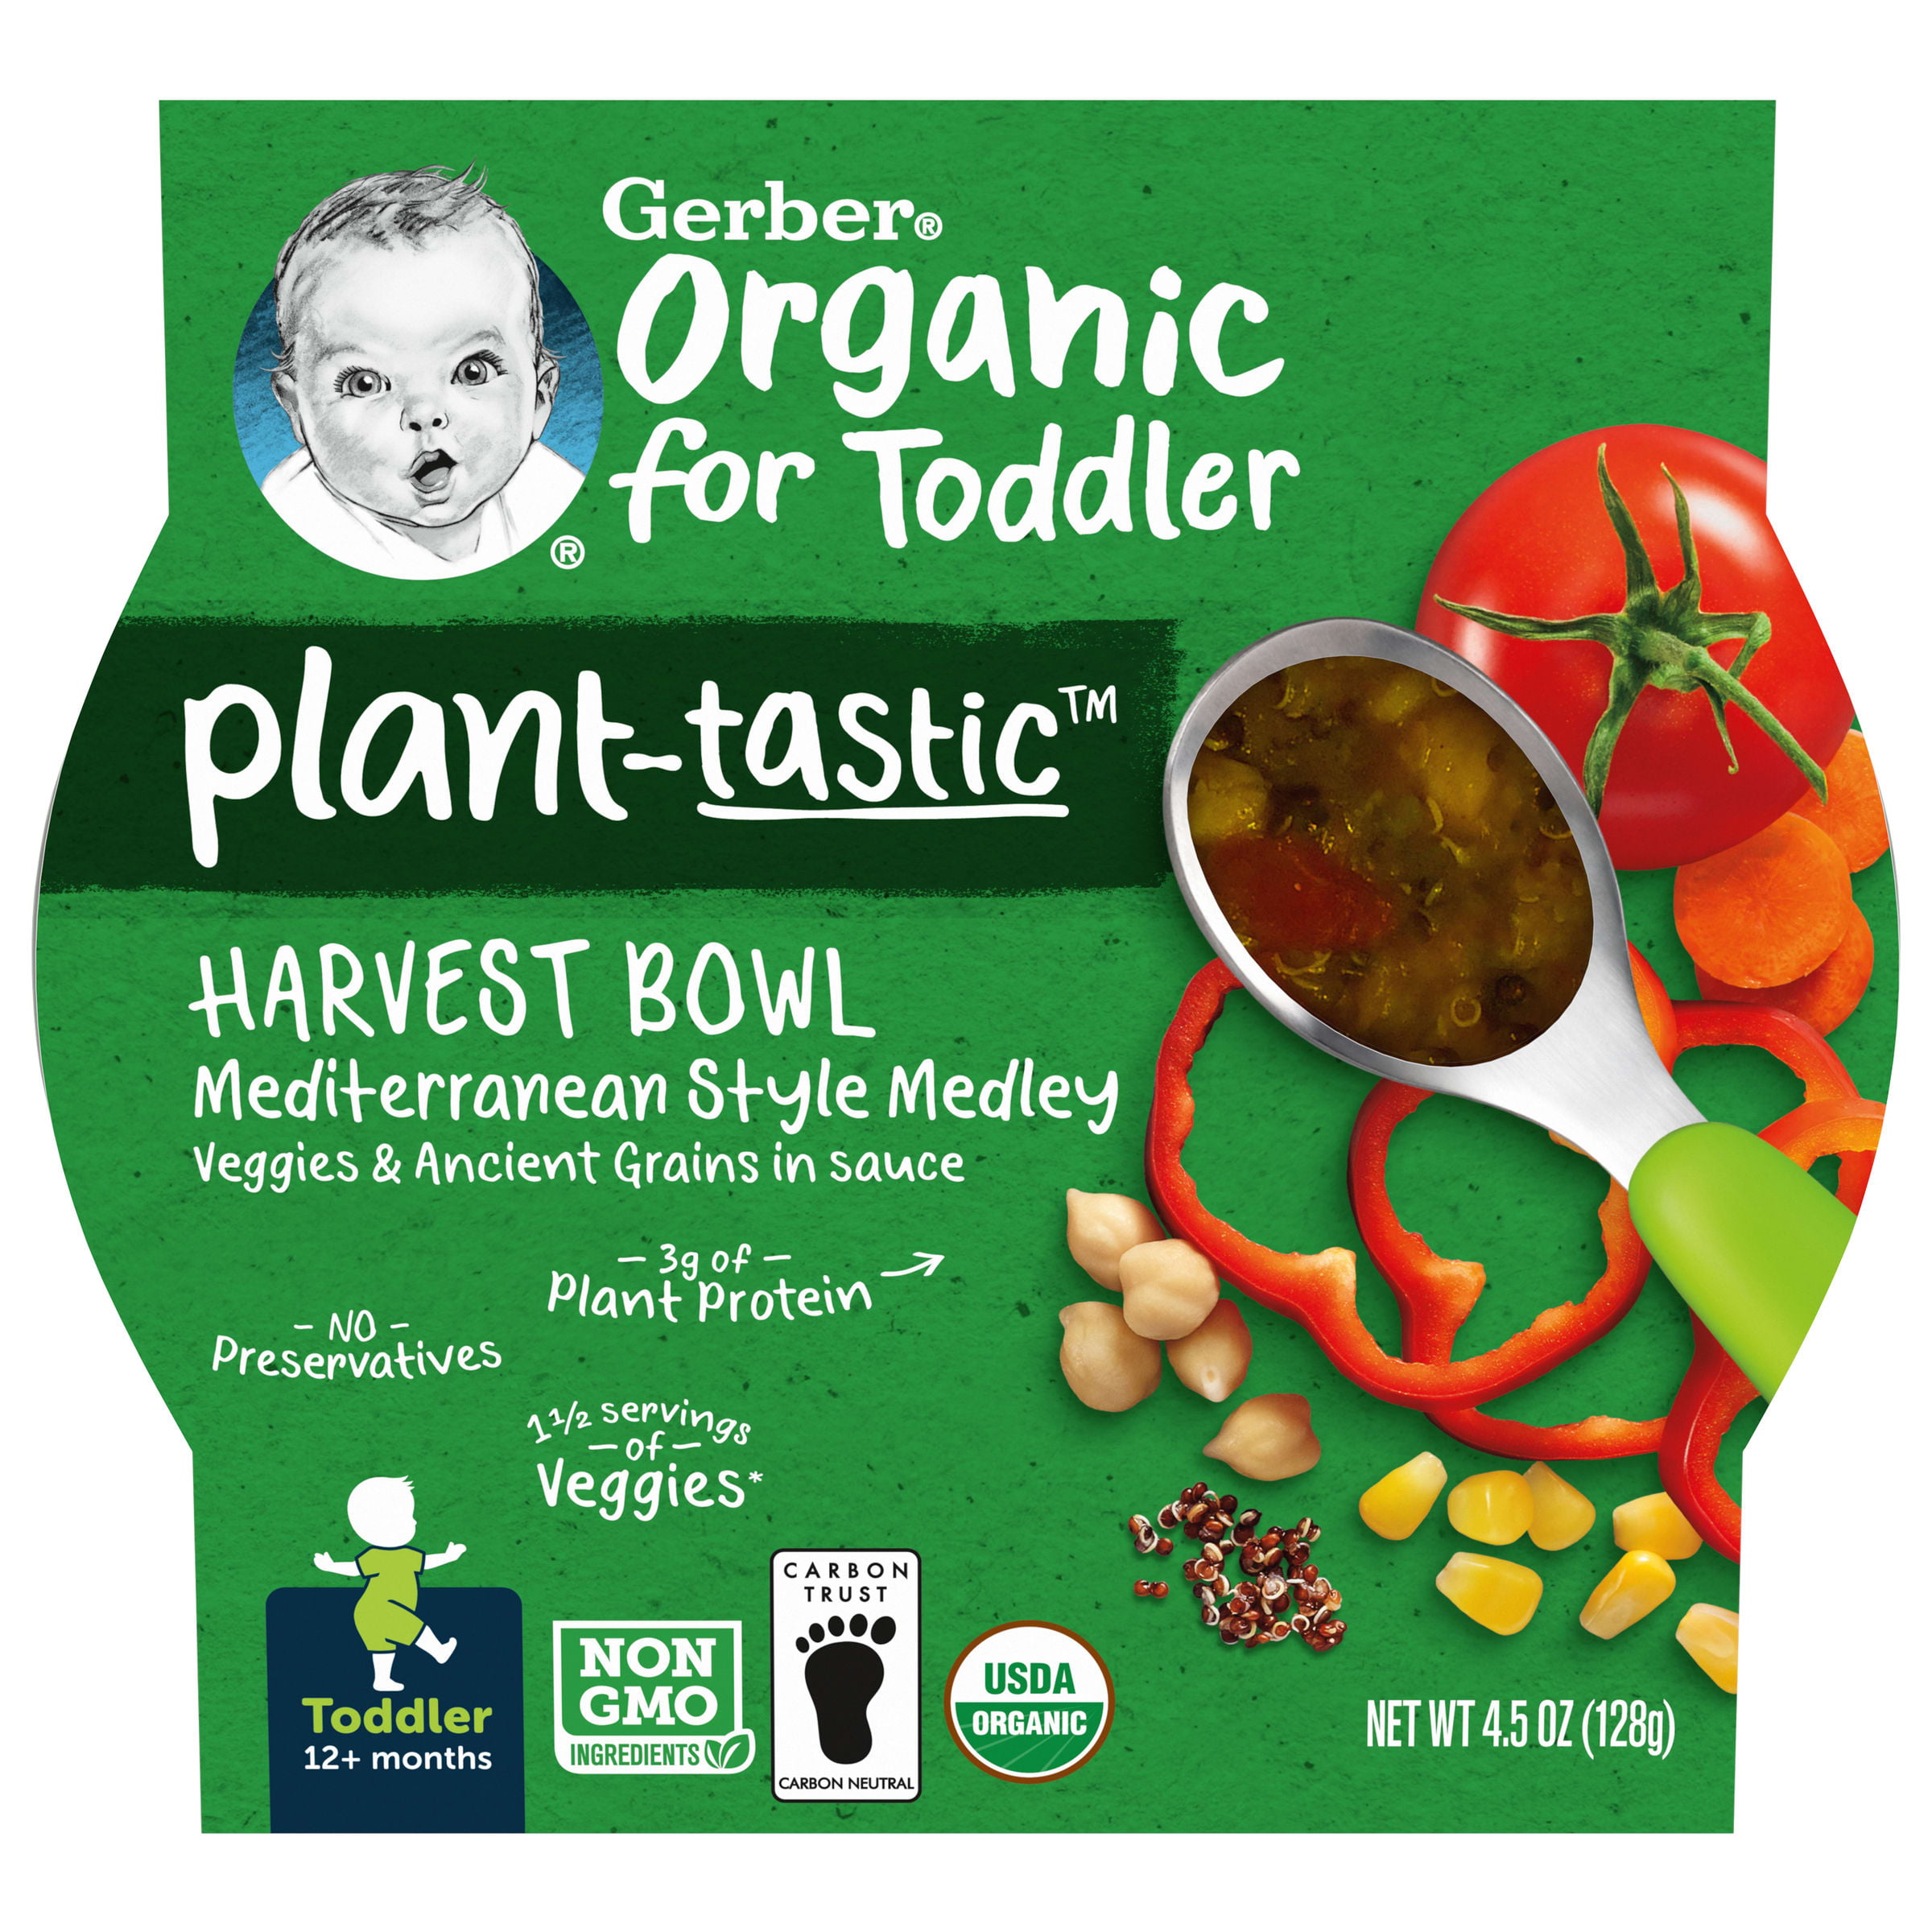 Gerber Organic for Toddler Plant-tastic Harvest Bowl, Mediterranean ...